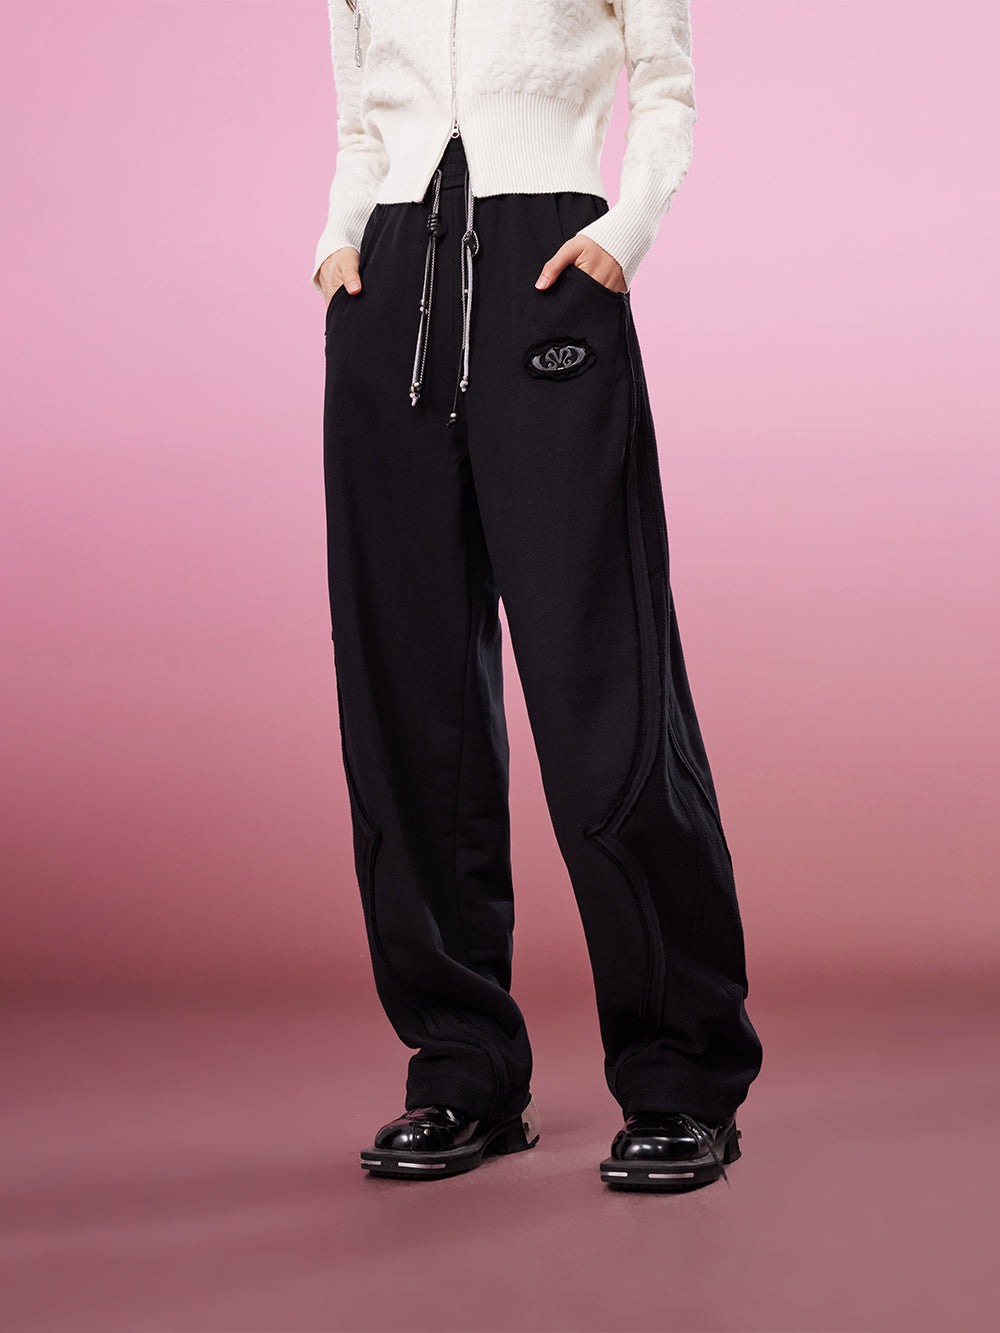 MUKZIN Casual Sports Style Solid Color Versatile Comfortable Pants